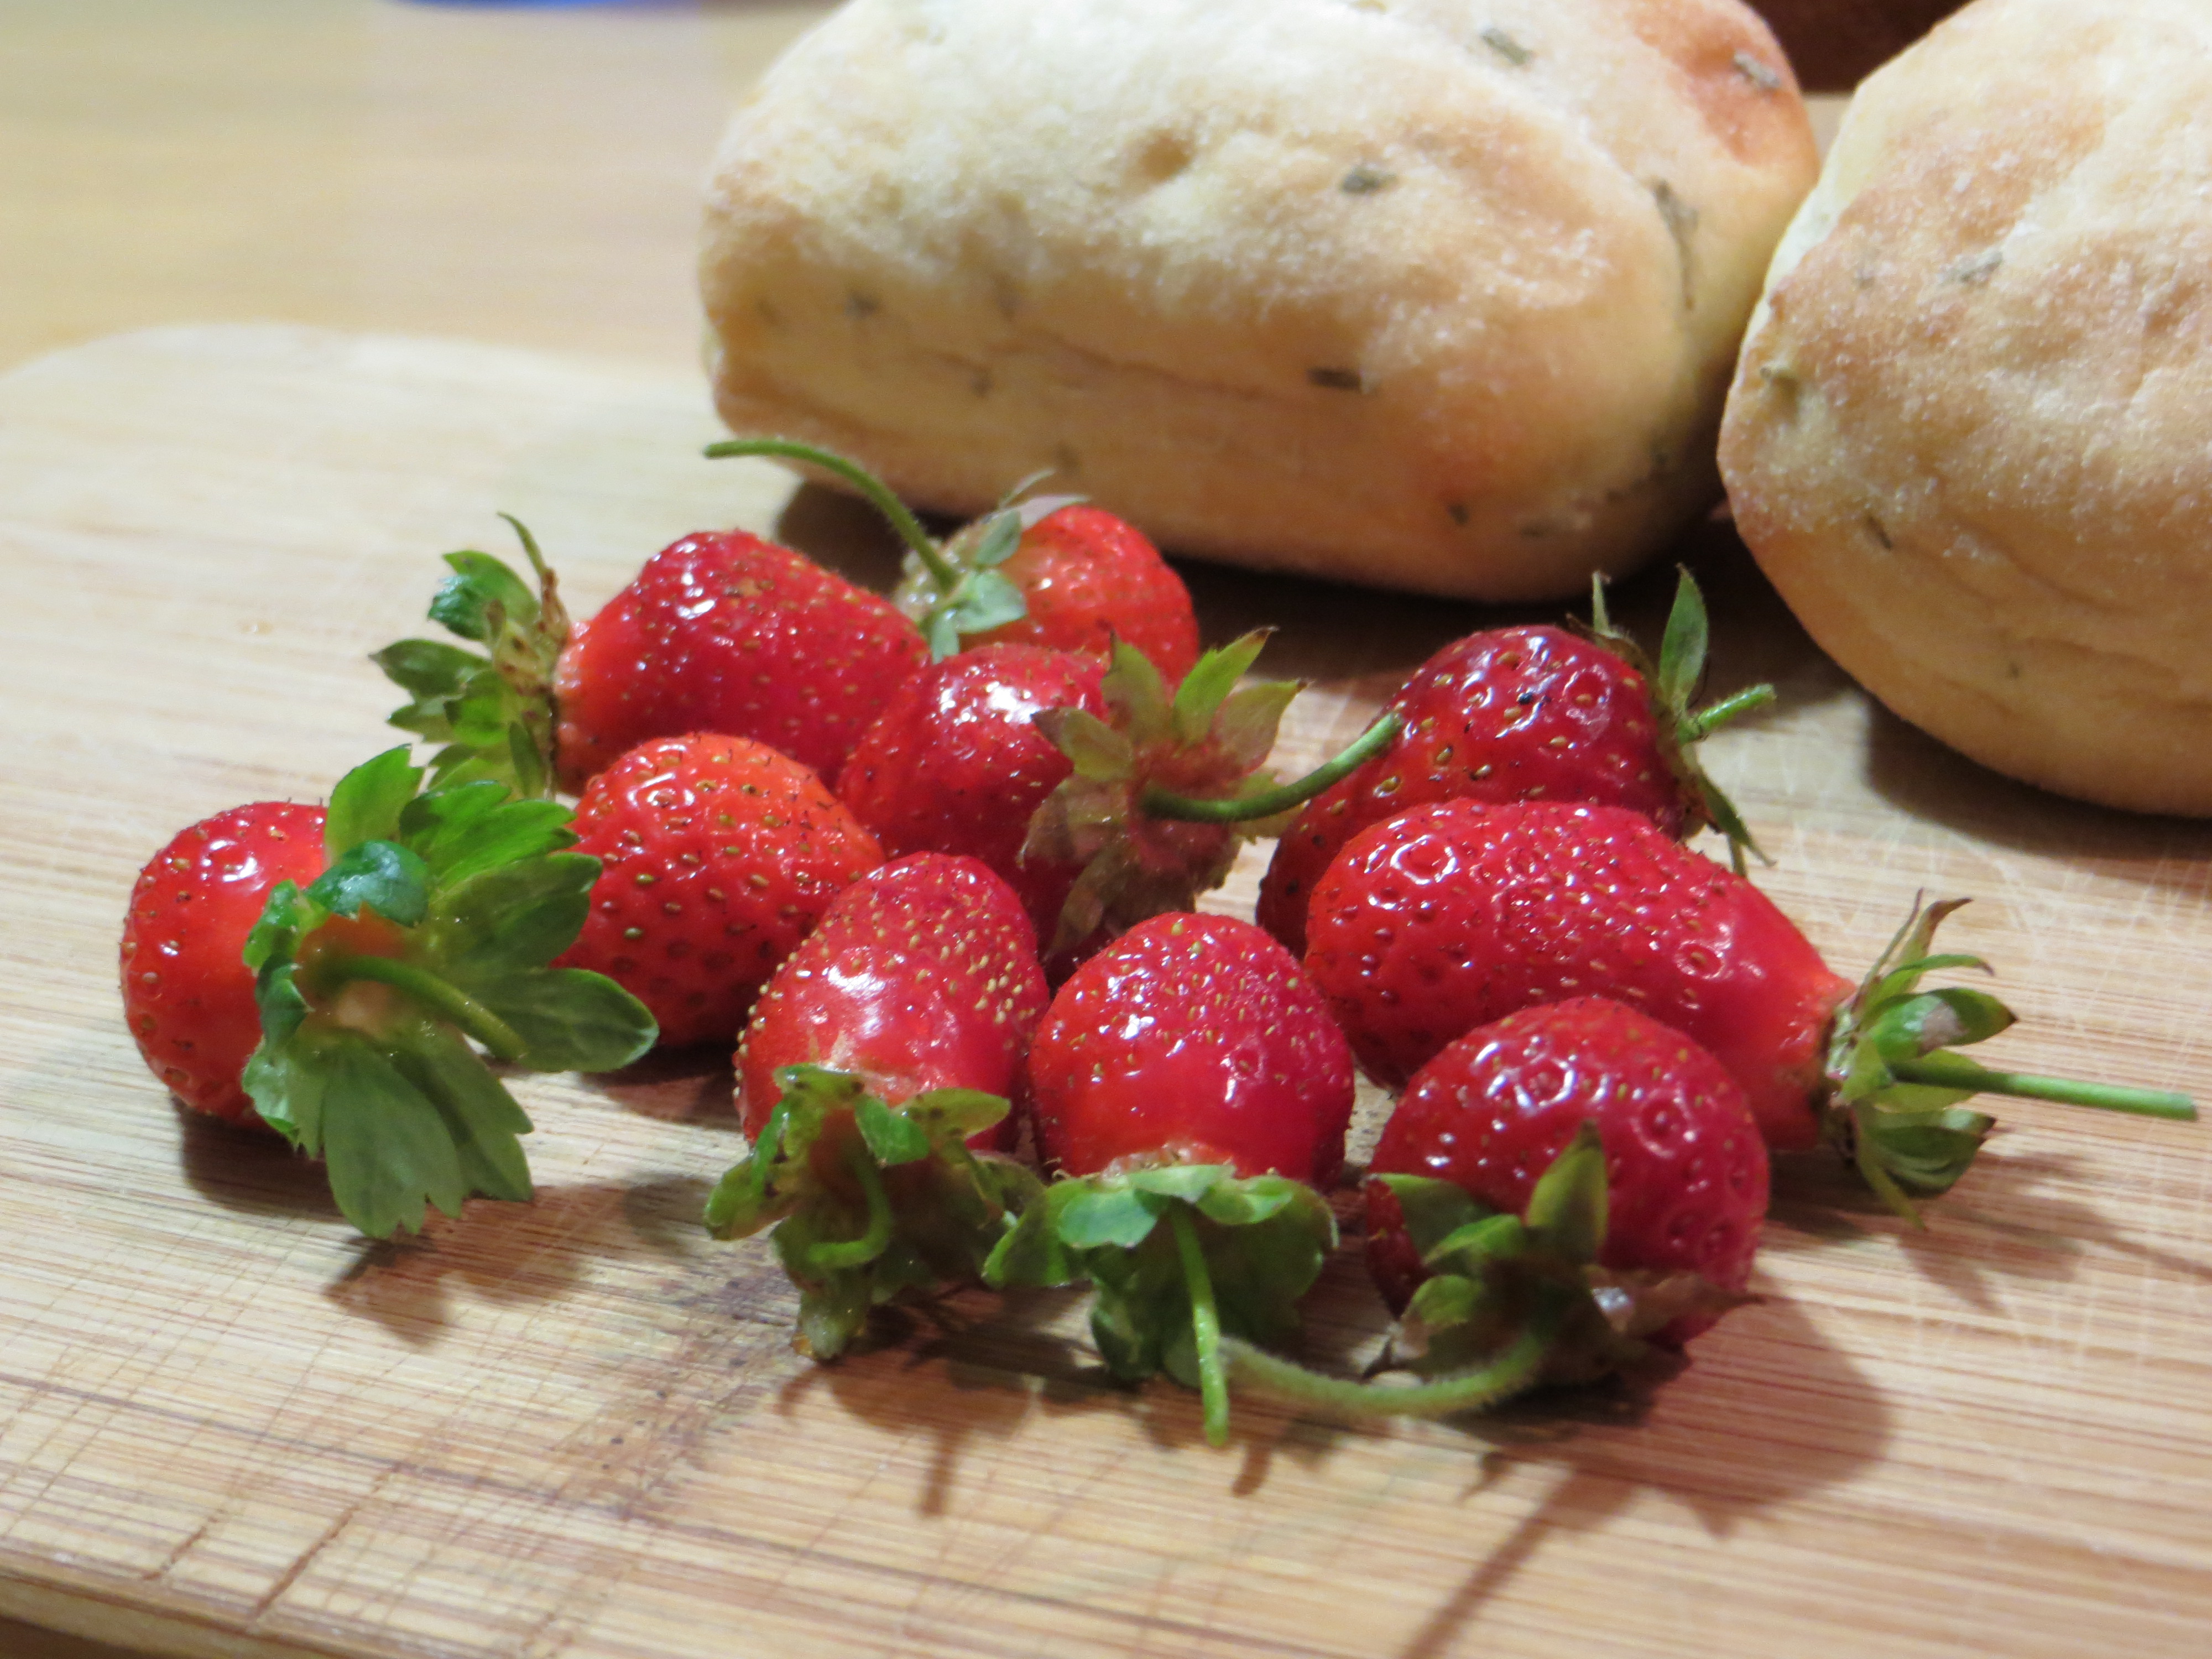 Fresh strawberries from the backyard garden